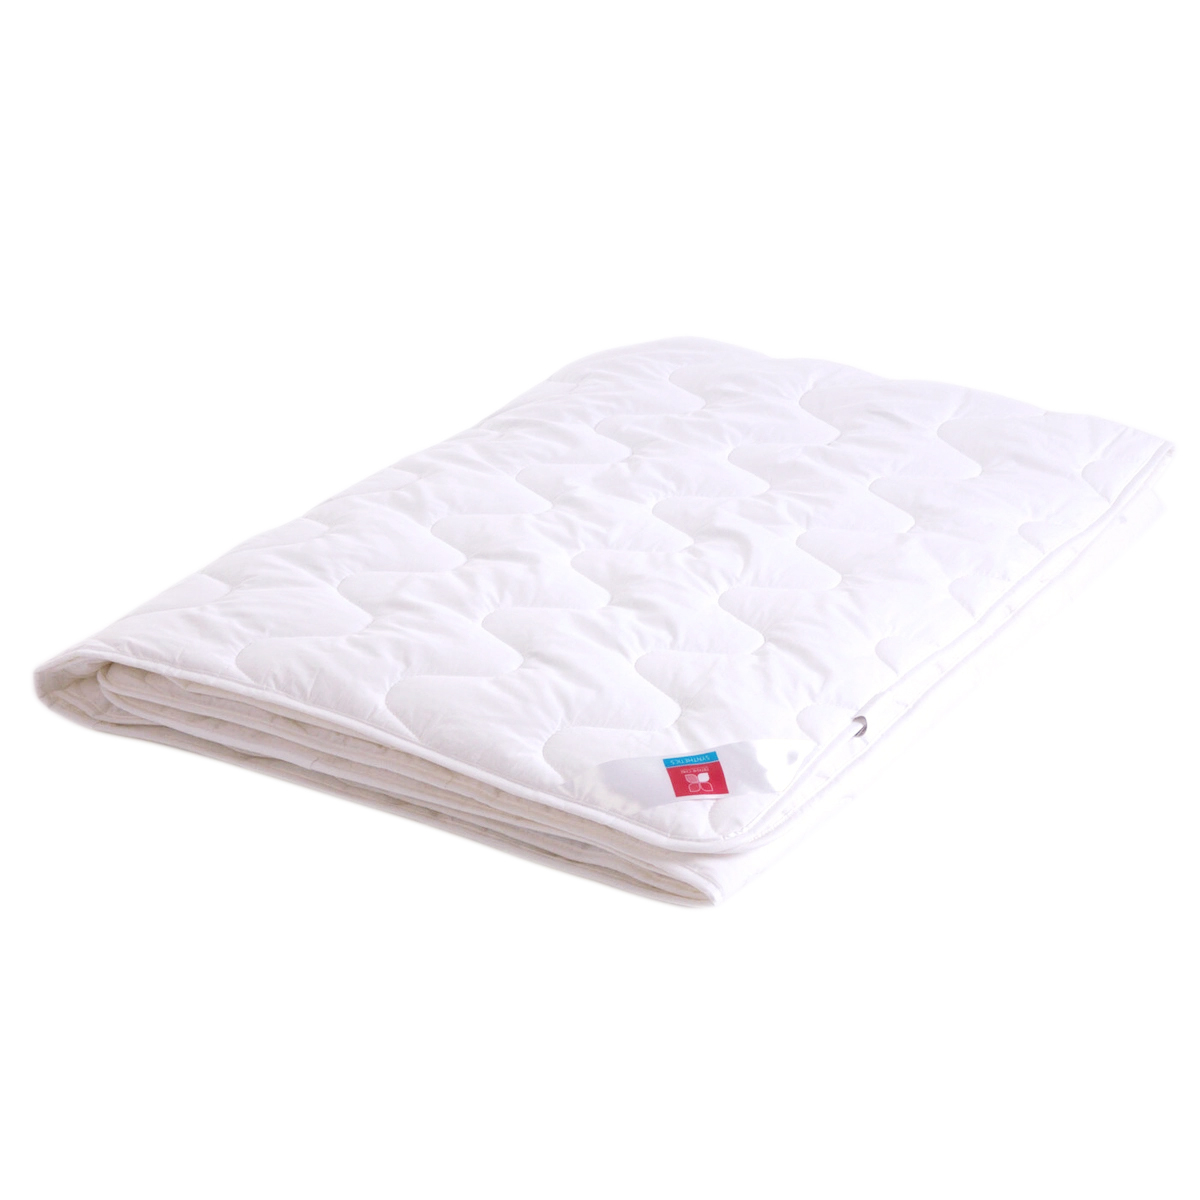 Одеяло Лель Легкое (140х205 см), размер 140х205 см, цвет белый lsn90297 Одеяло Лель Легкое (140х205 см) - фото 1